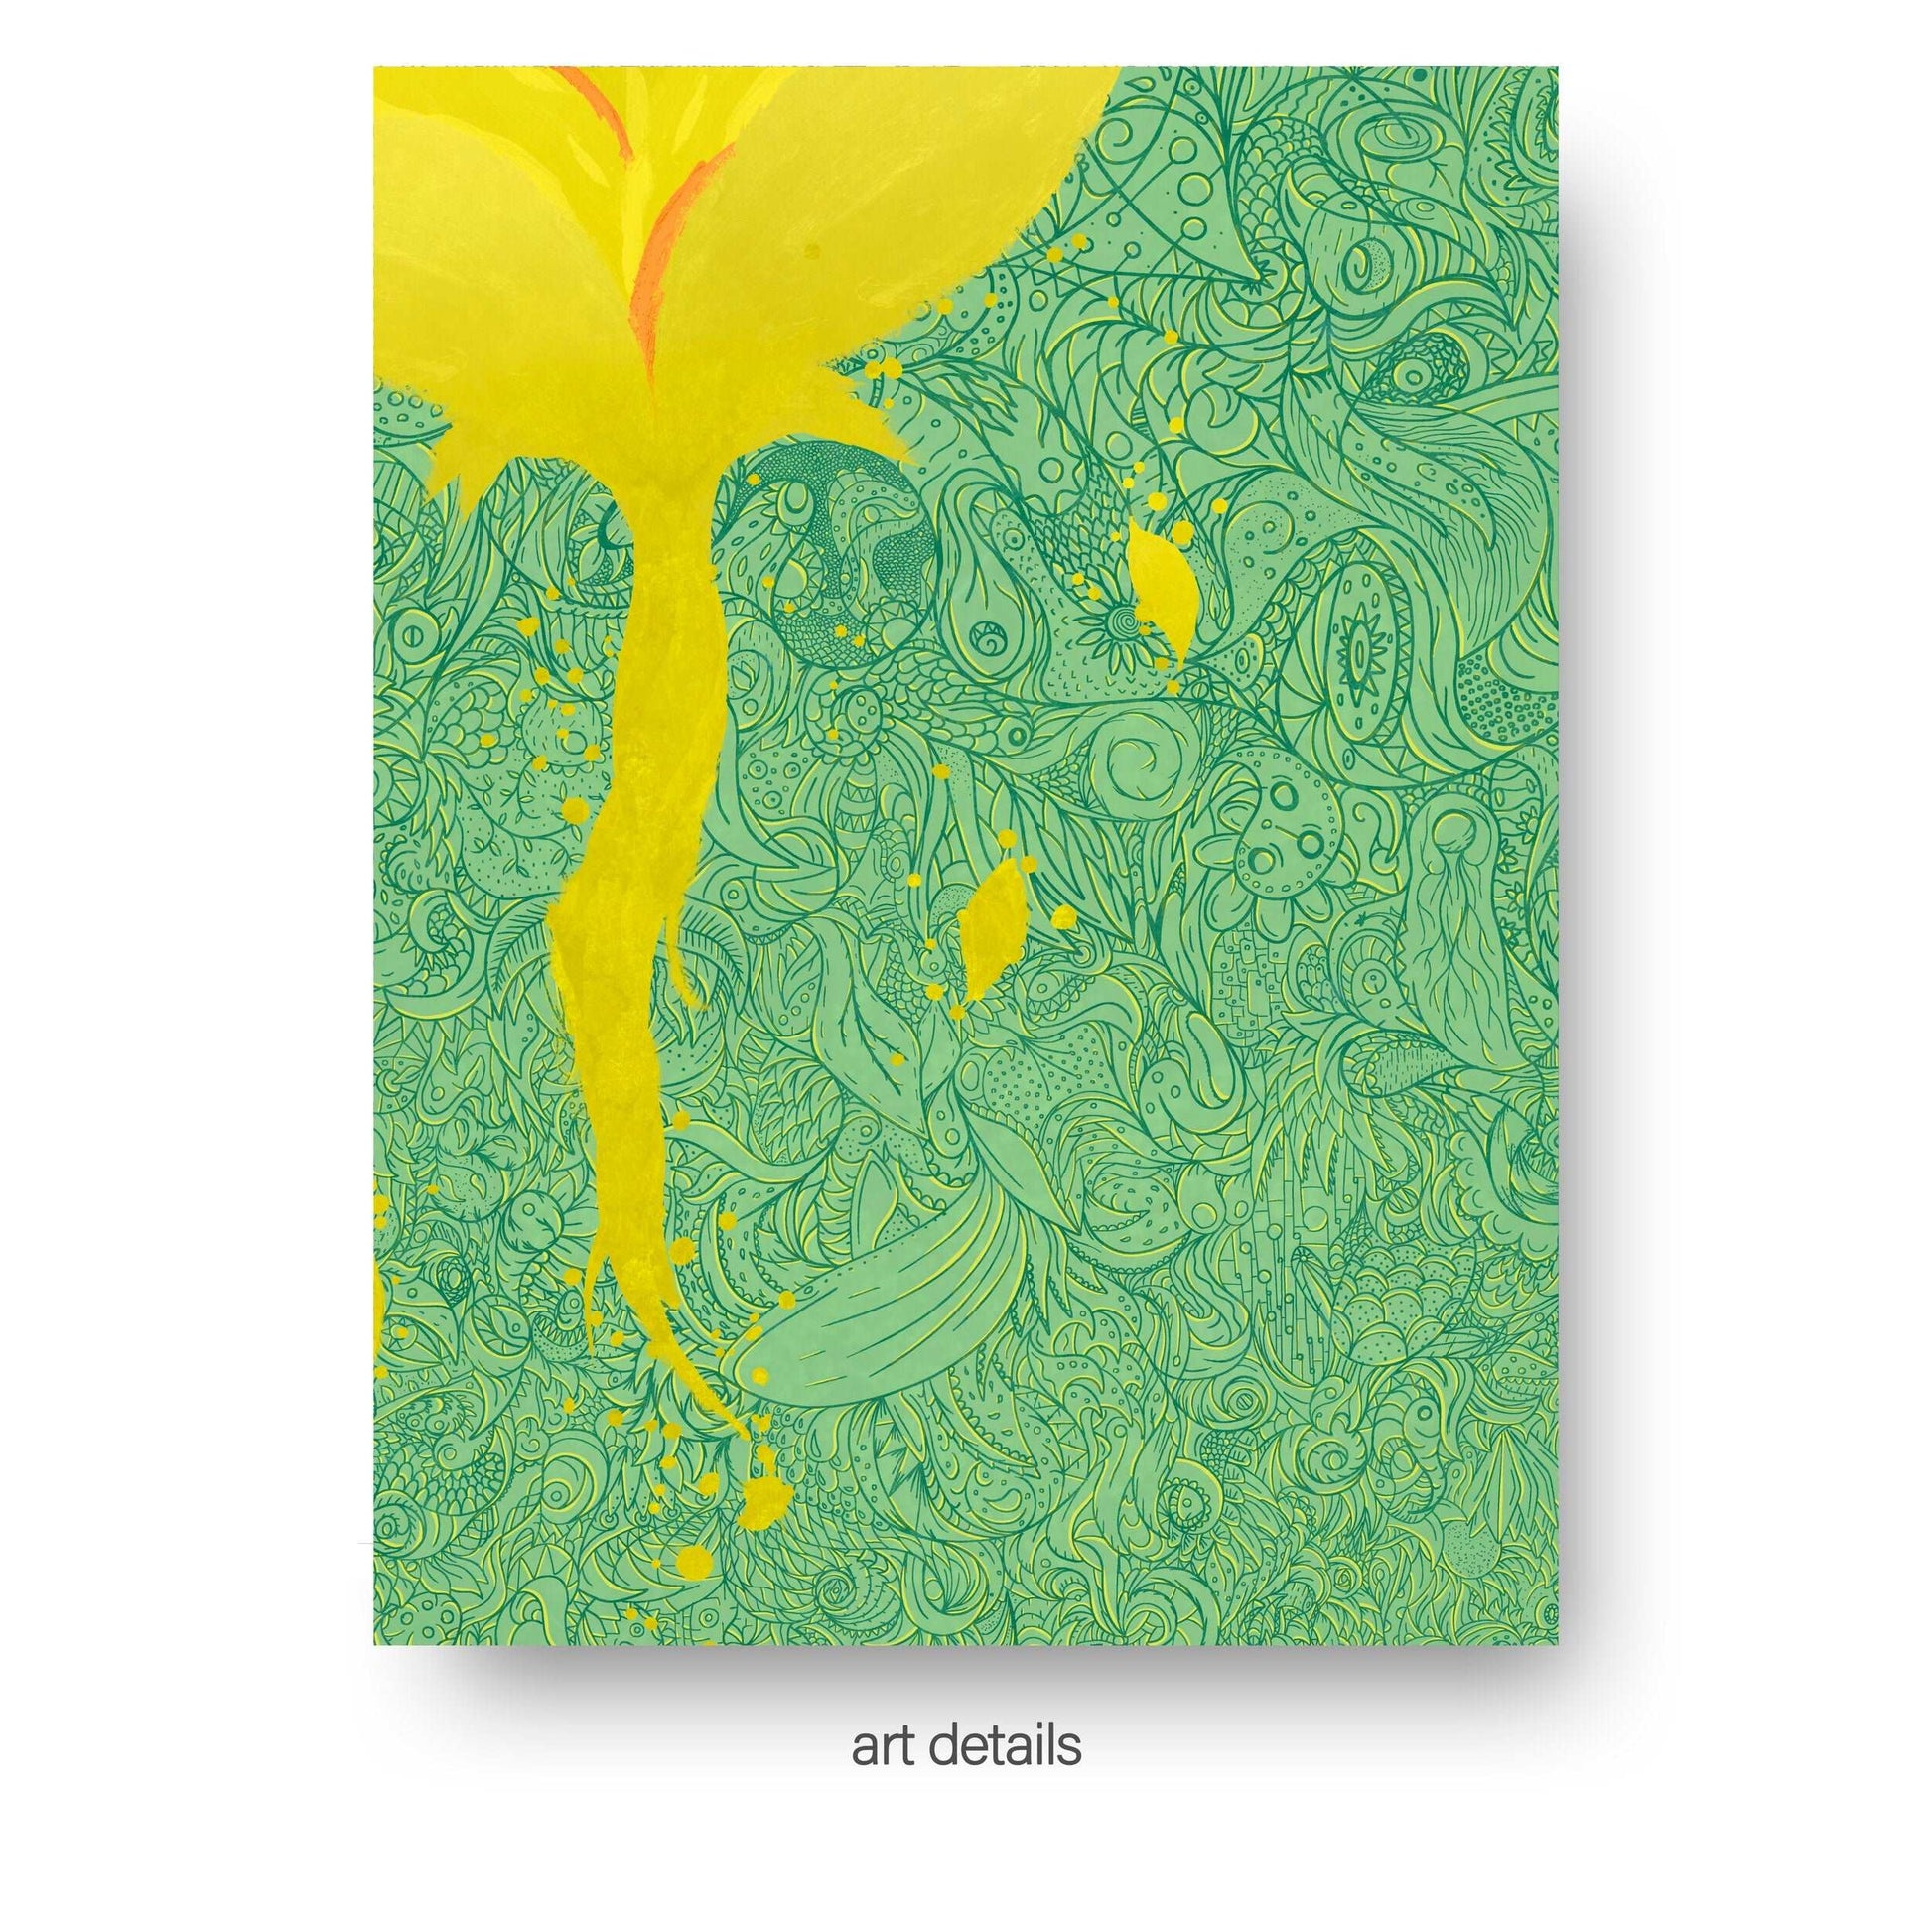 NOKUKO - art - Alan Pedersen - ALANTHEROCK - Devotion - listen to you - limited edition - Green Kindness art details